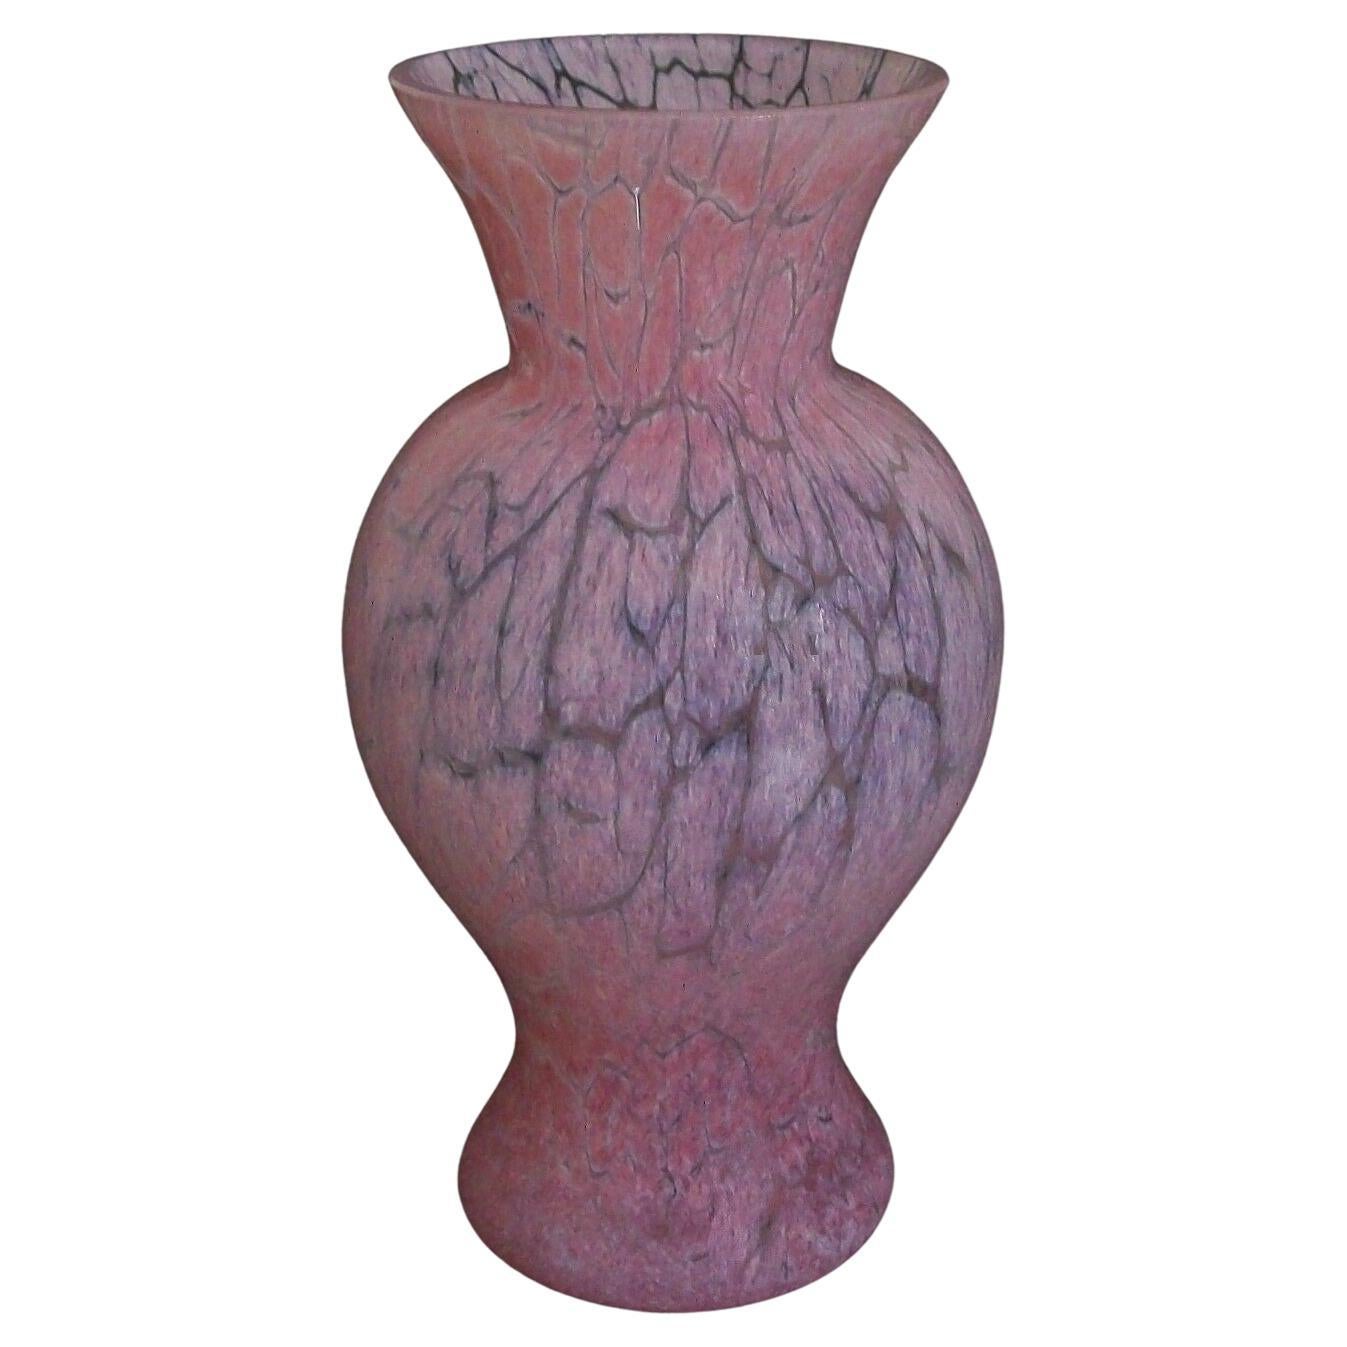 KOSTA BODA  Ulrica Hydman-Vallien - Crackle Glass Vase - Sweden - 20th Century For Sale